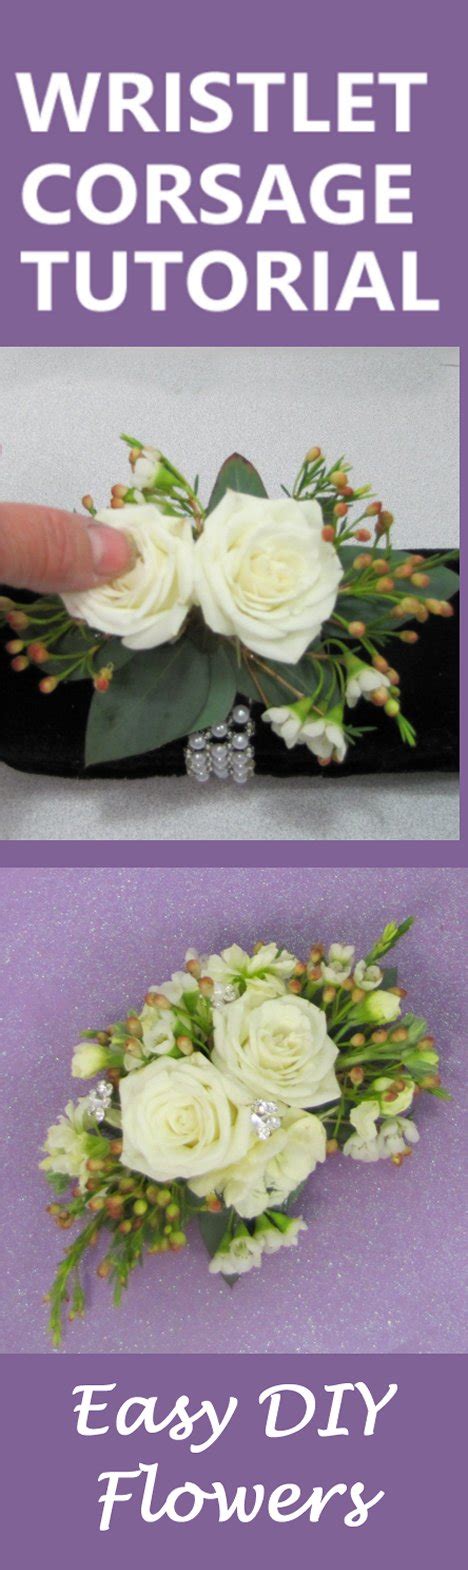 How To Make A Wrist Corsage Free Diy Wedding Flower Tutorials Diy